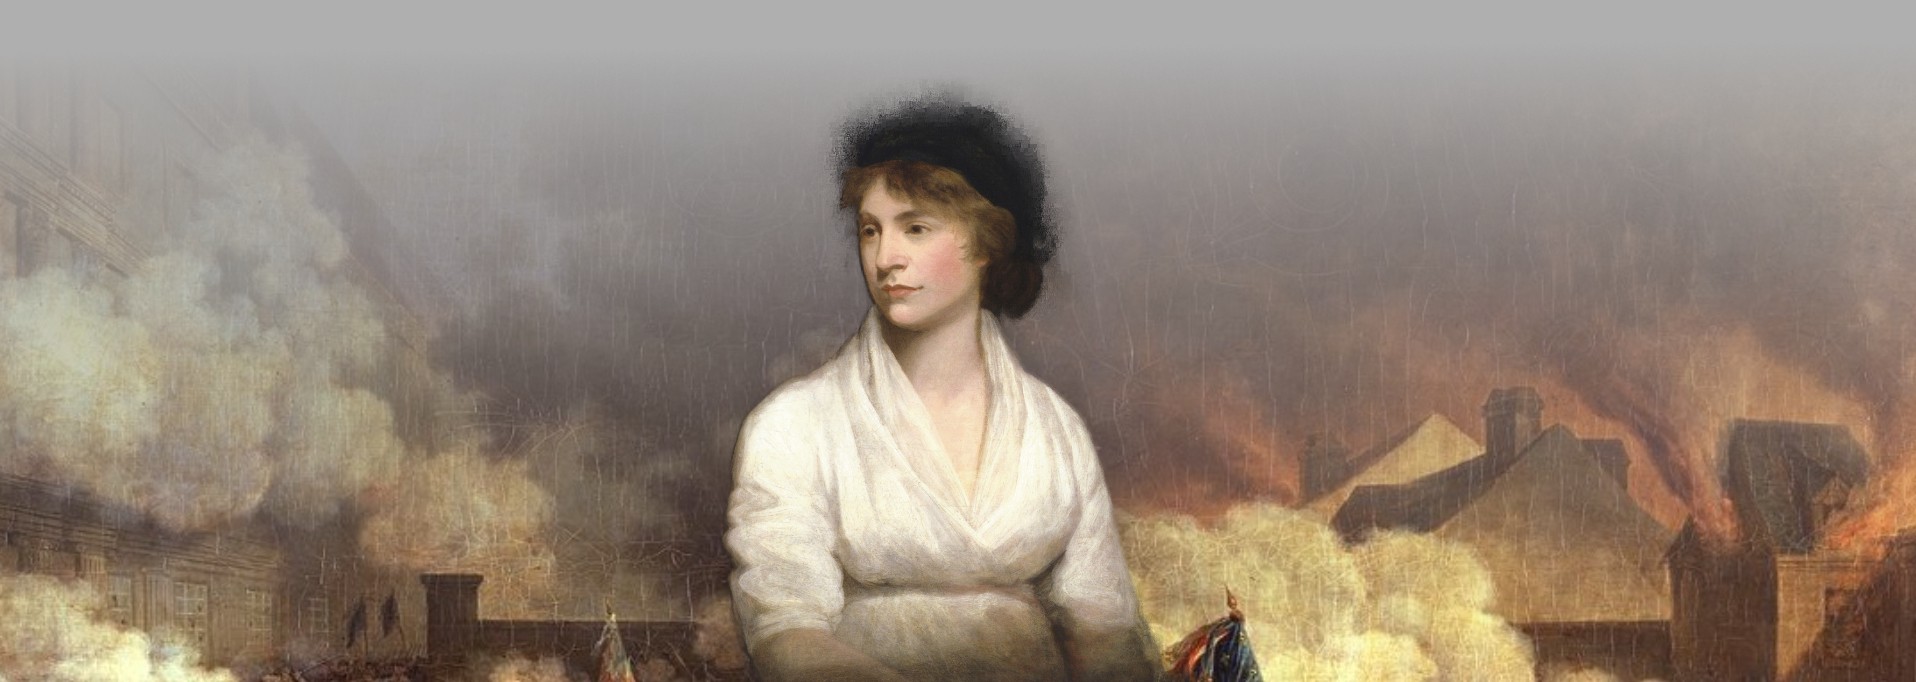 Liberal Feminizm ve Marry Wollstonecraft